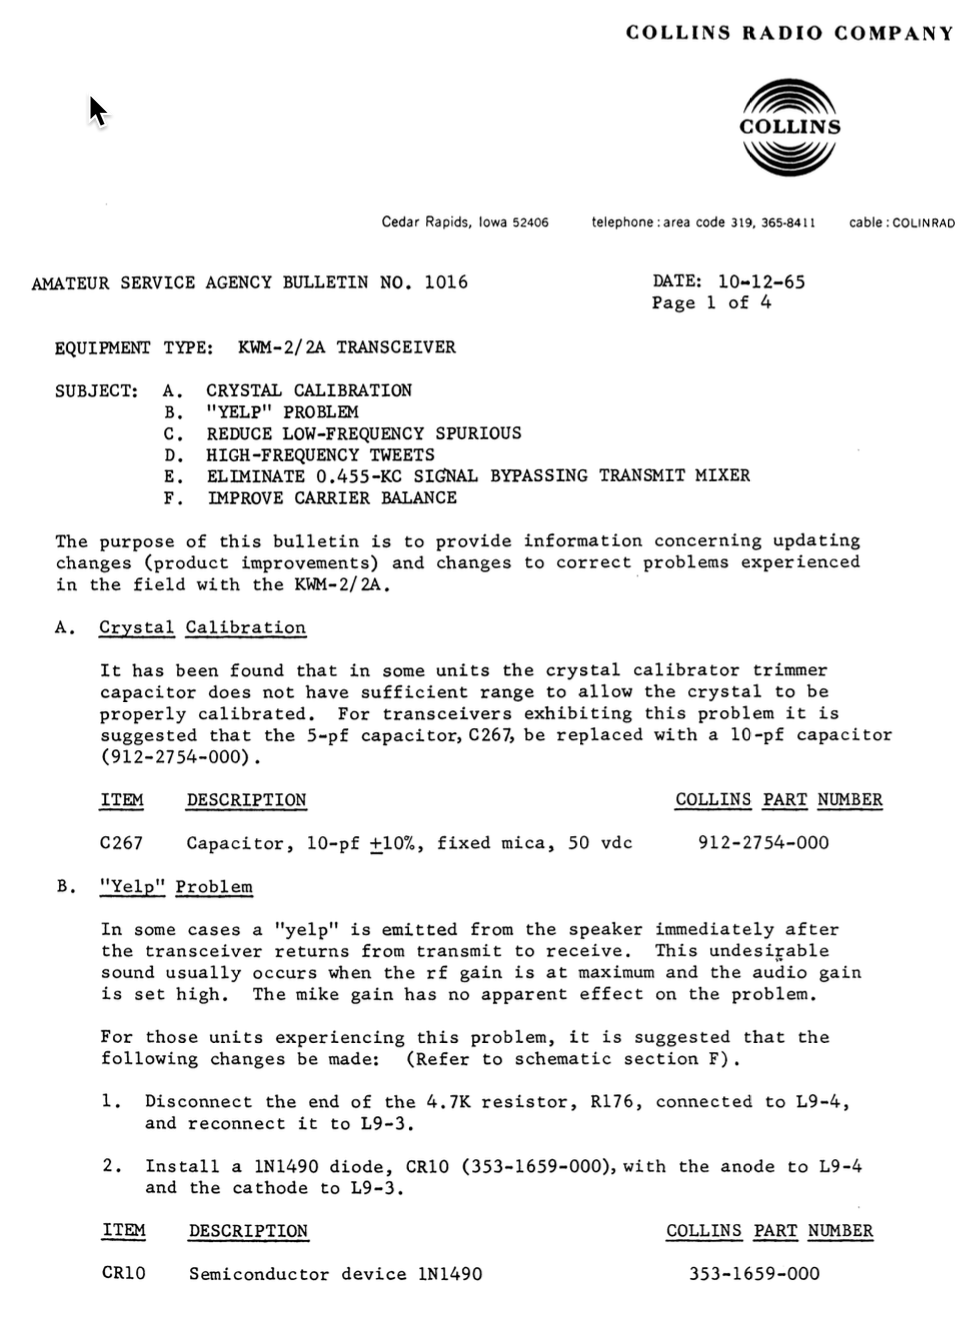 Collins Amateur Service Agency Bulletin Number 1016 (1965-10)